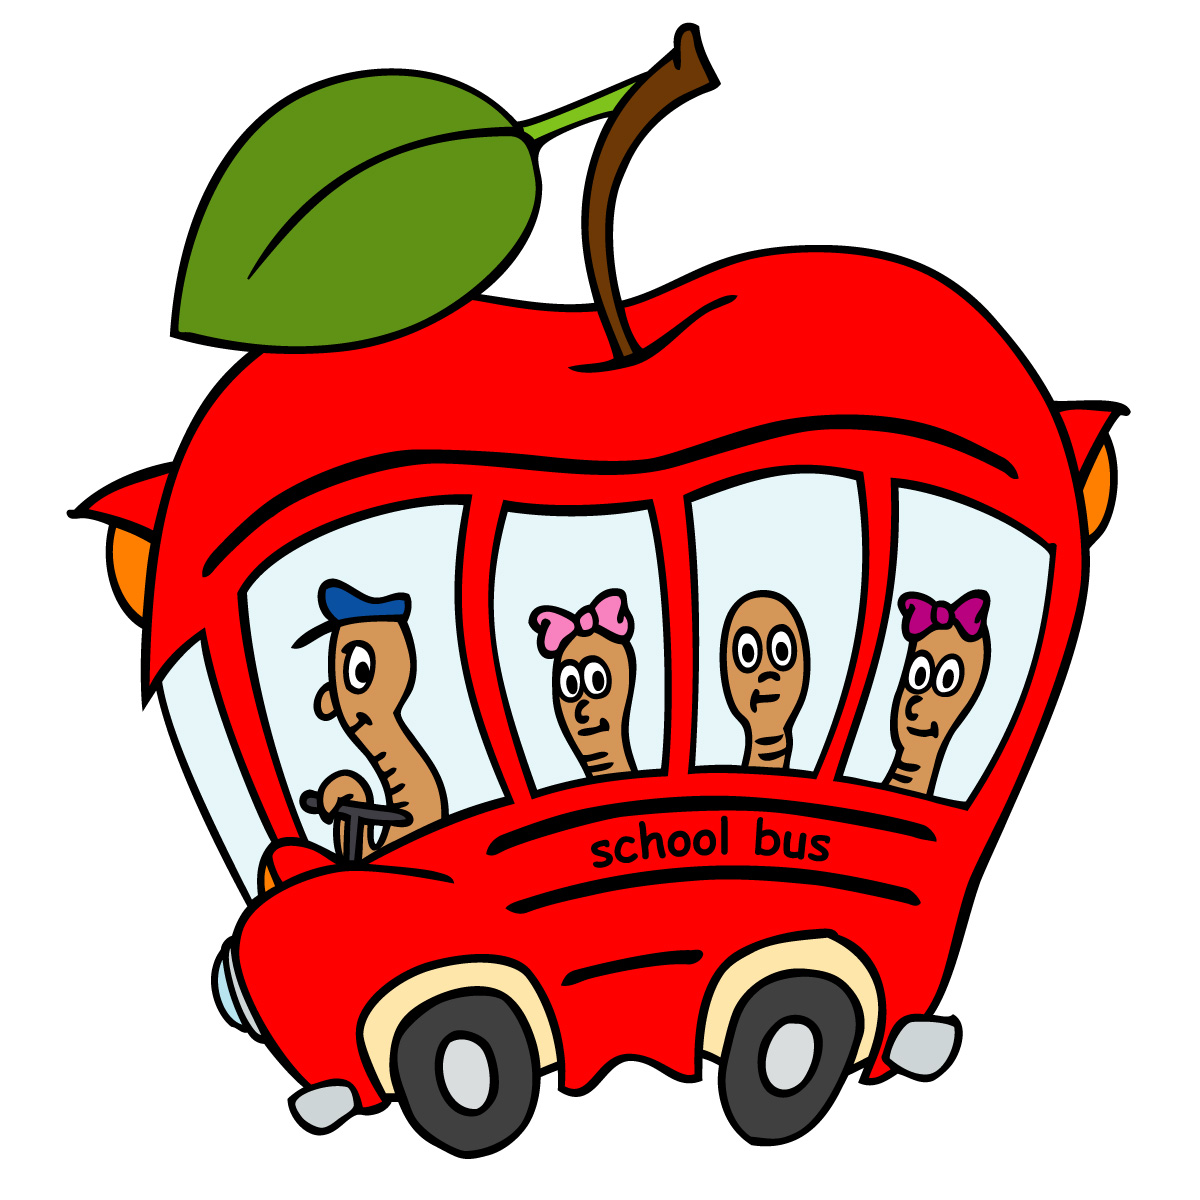 School bus back to school clipart - ClipartFox